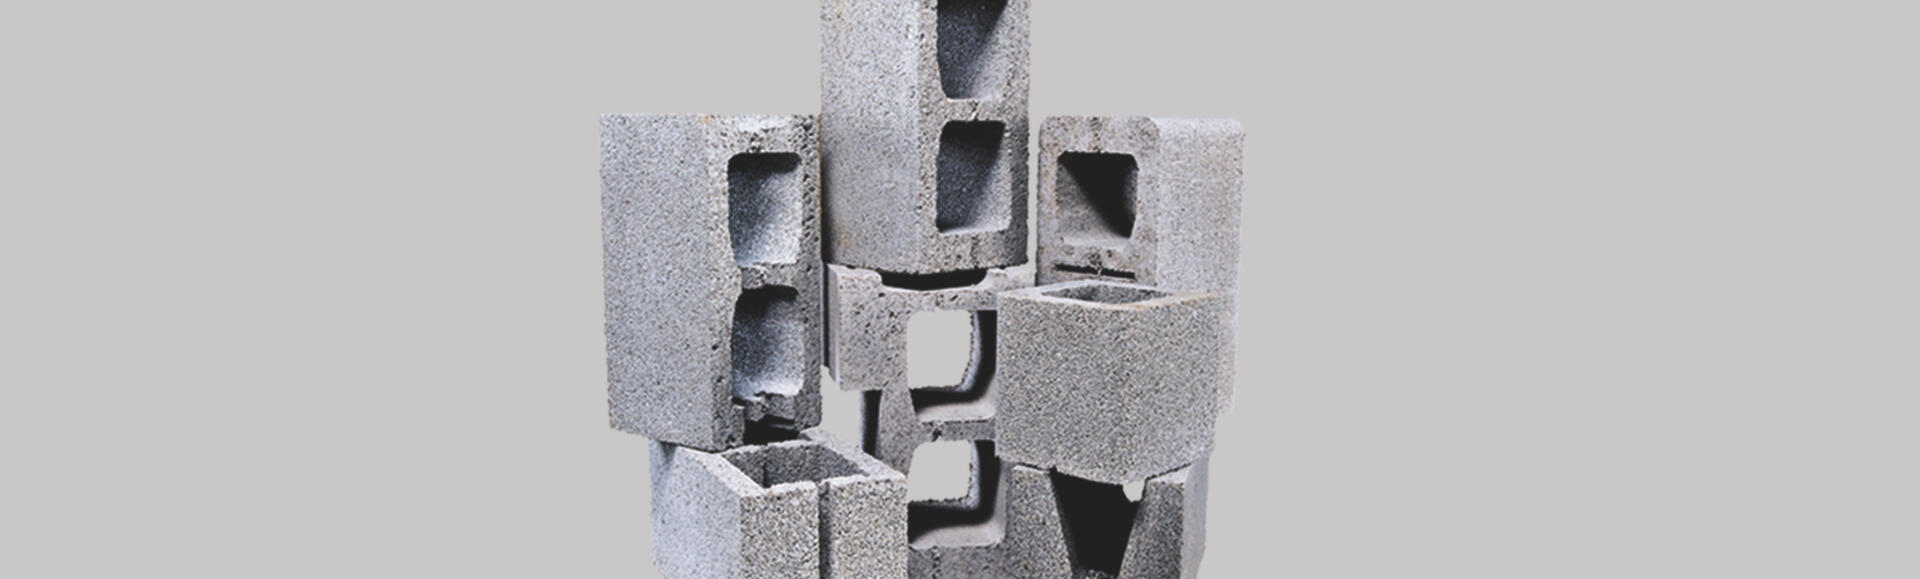 Standard Block product by Brampton Brick